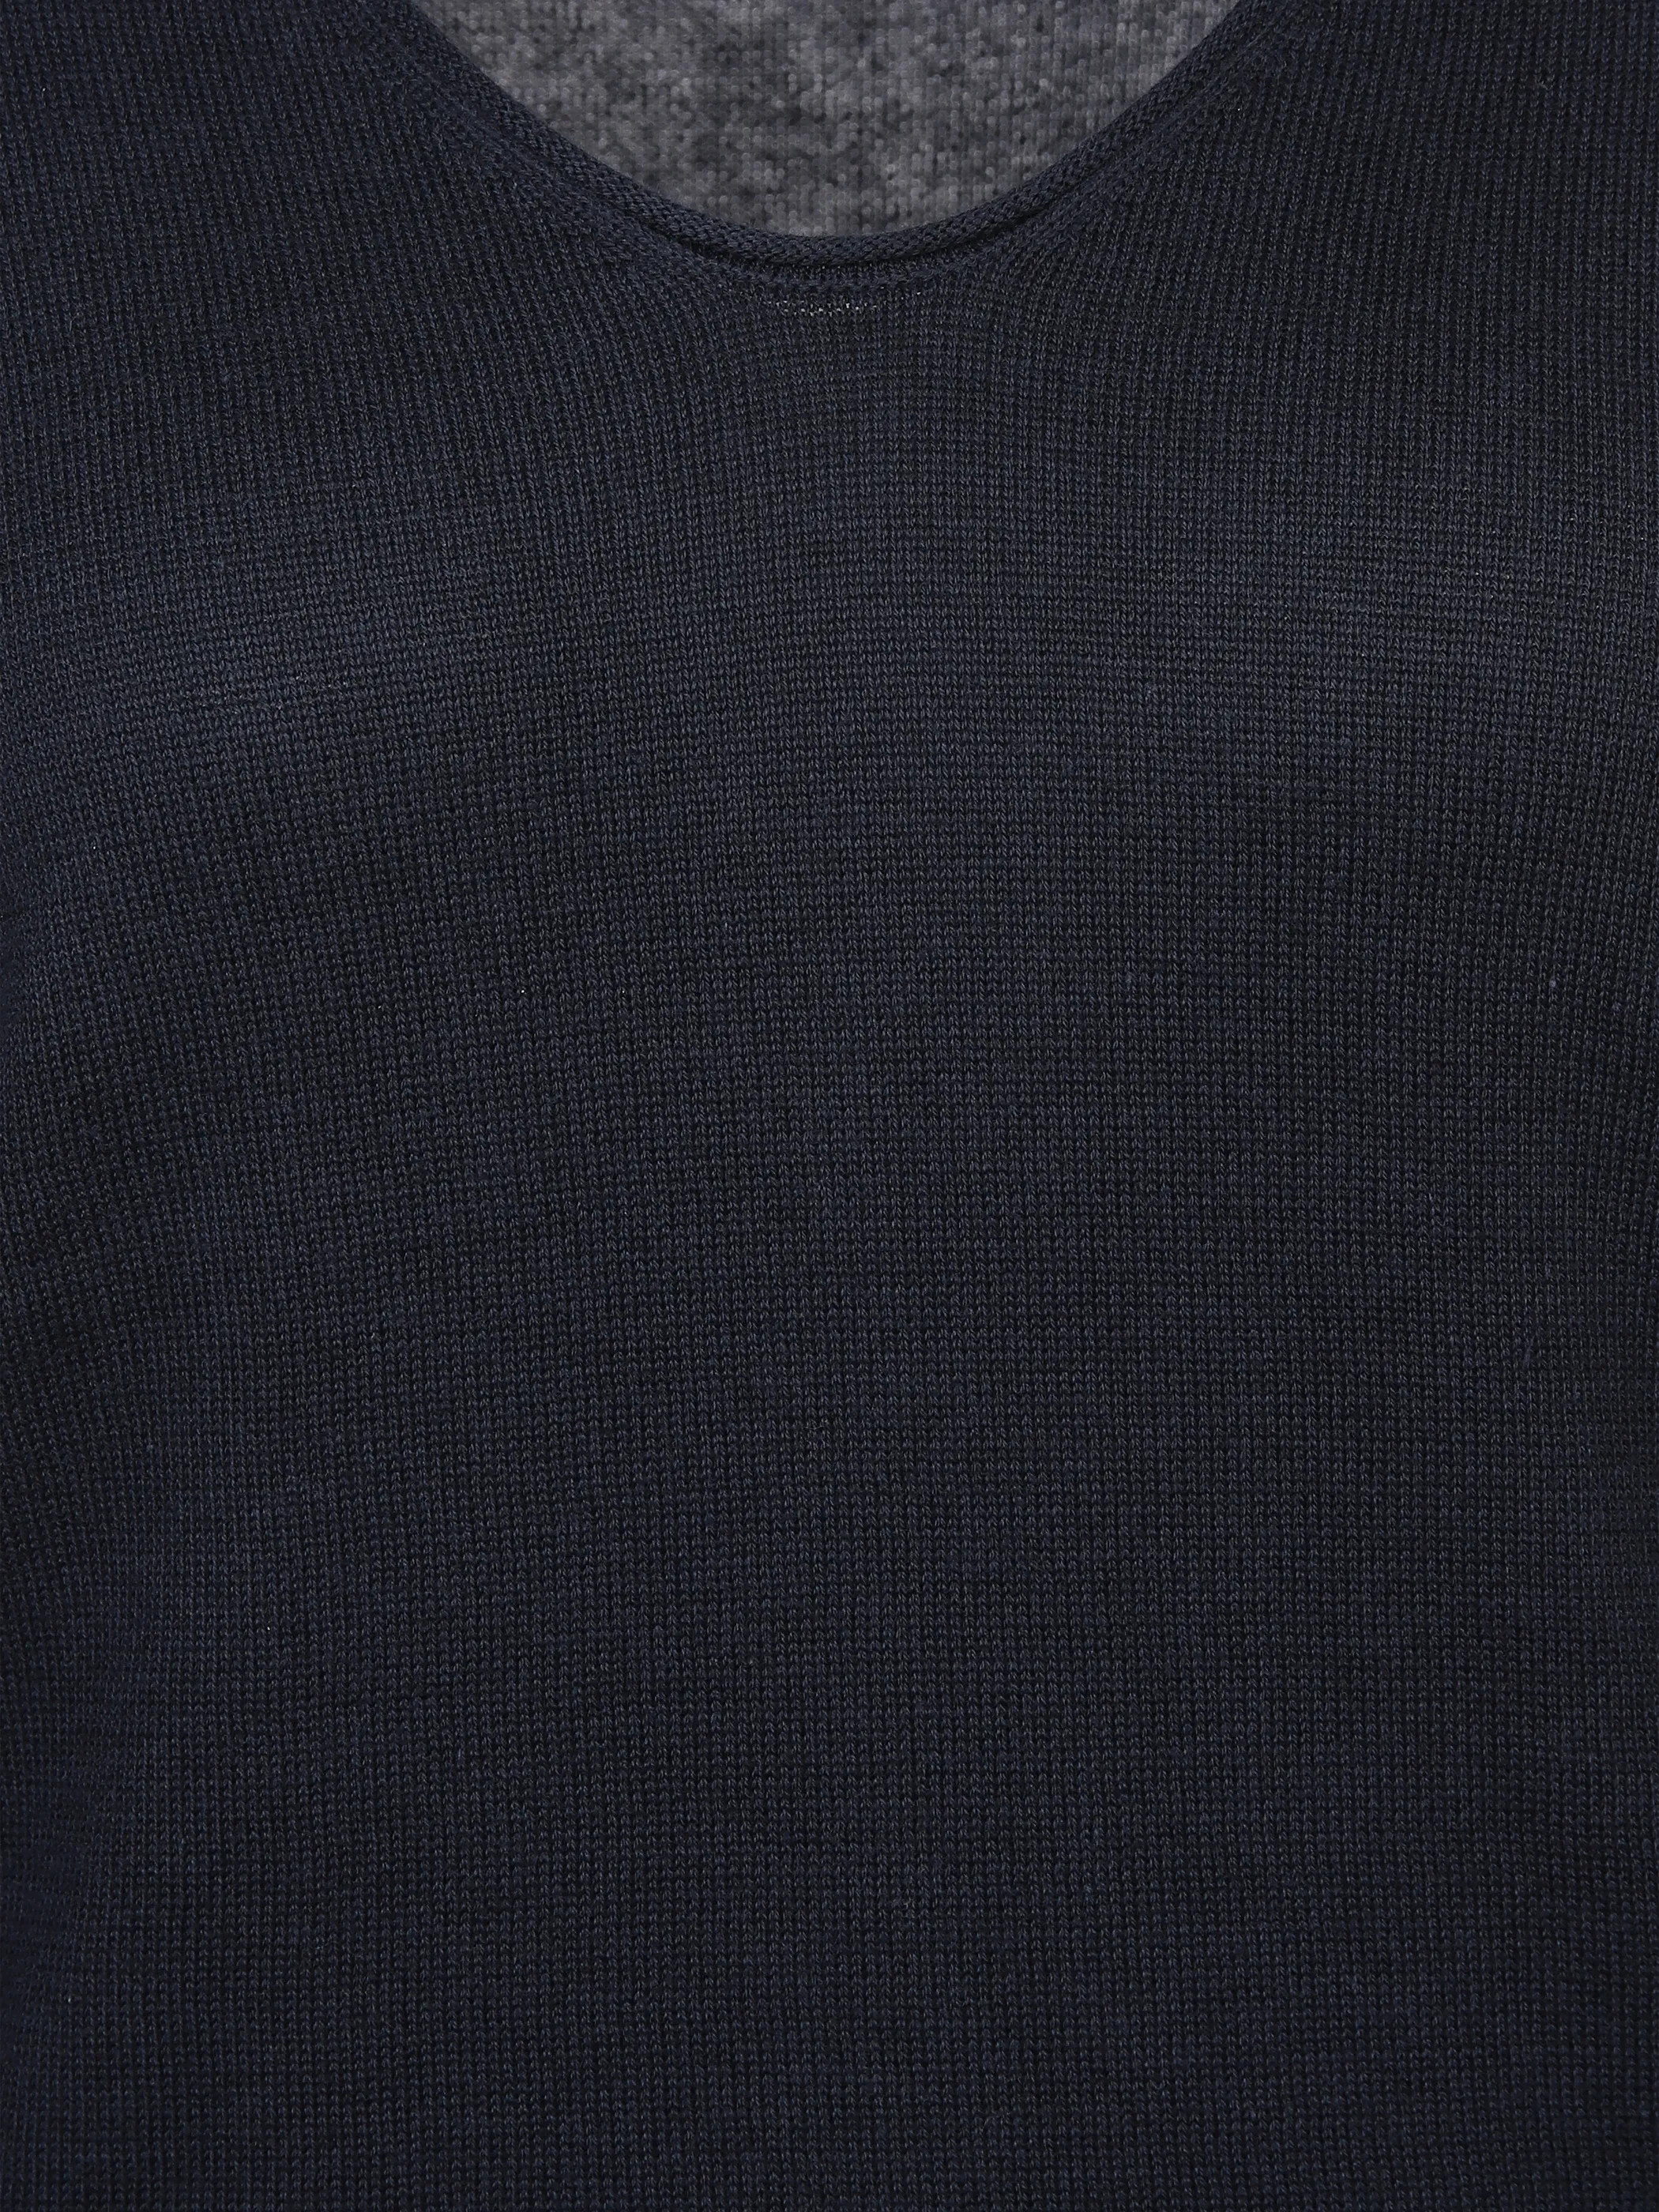 Tom Tailor 1012976 NOS sweater basic v-neck Blau 824304 10360 3